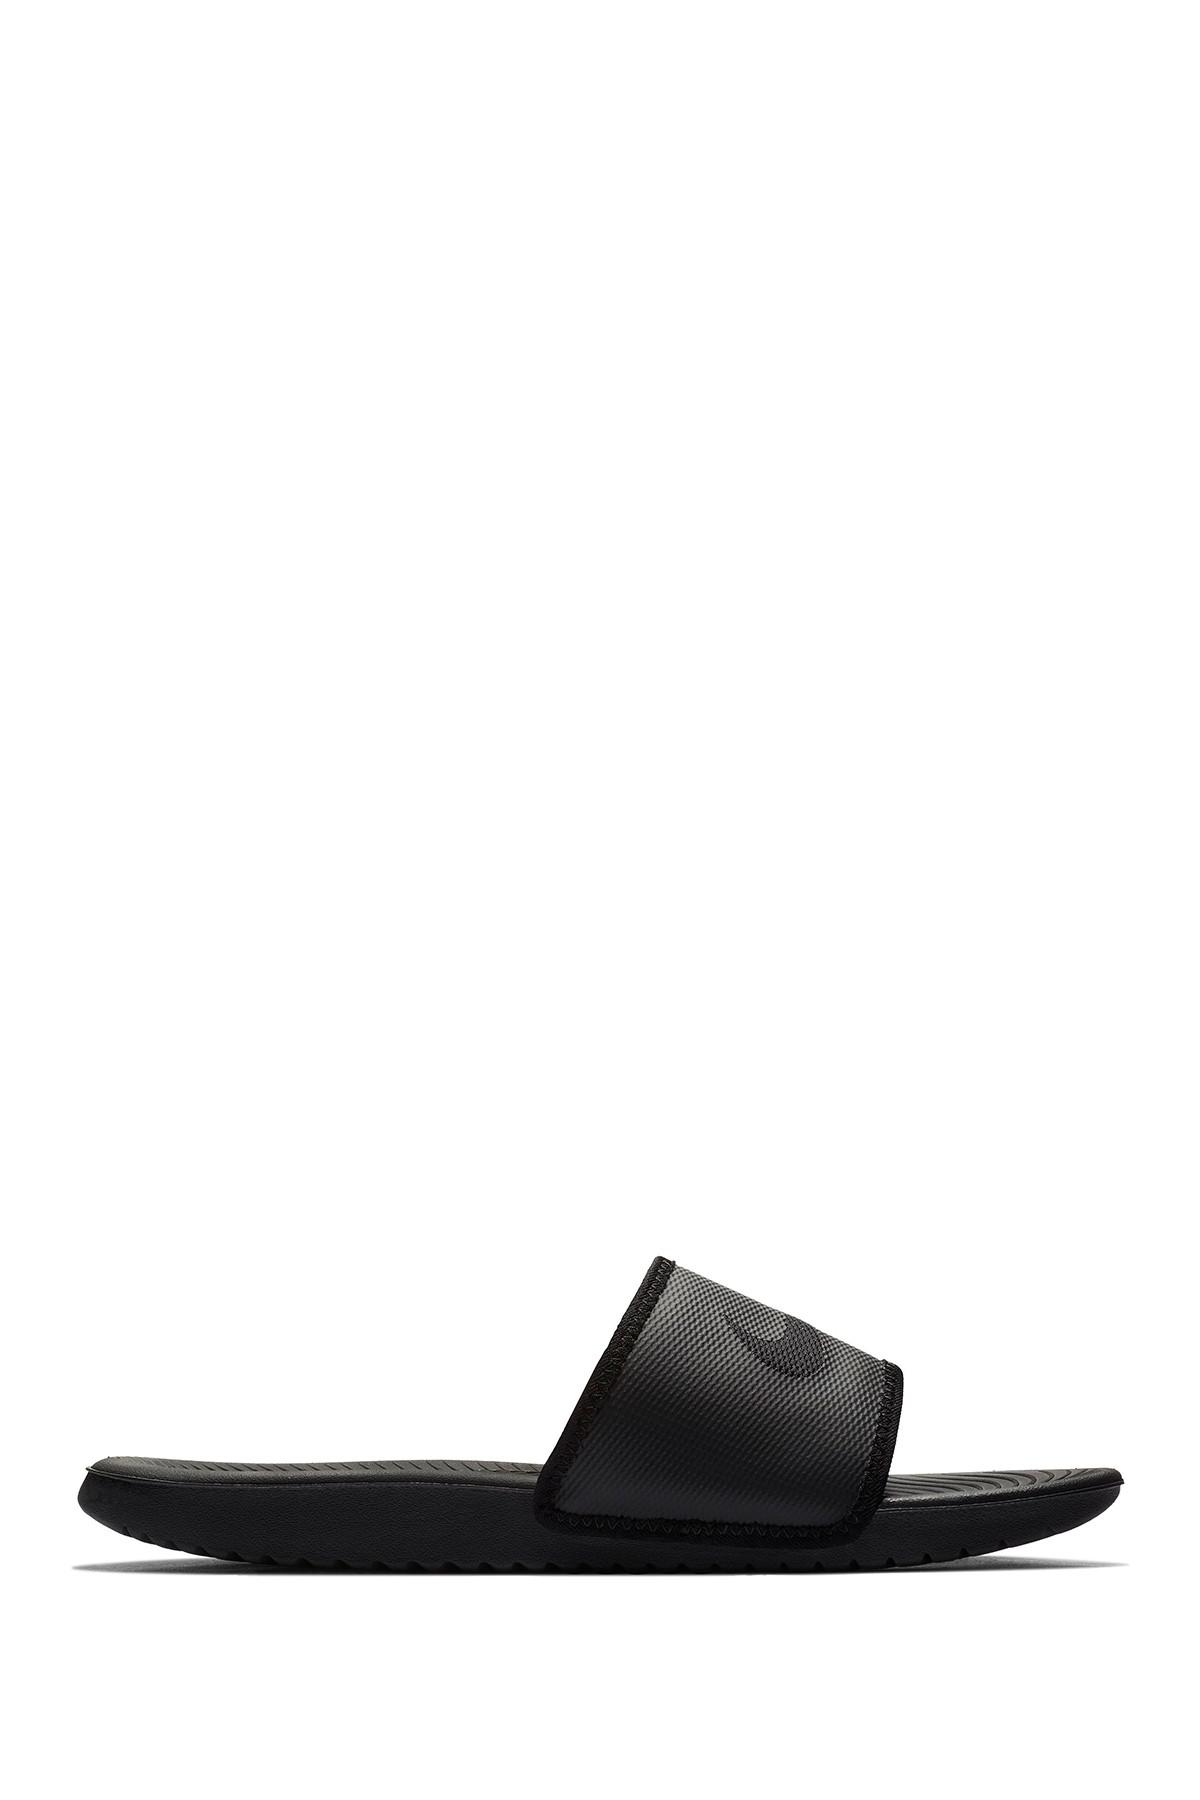 Nike Synthetic Men's Kawa Adjustable Slide Sandals From Finish Line in  Black/Black (Black) for Men - Lyst